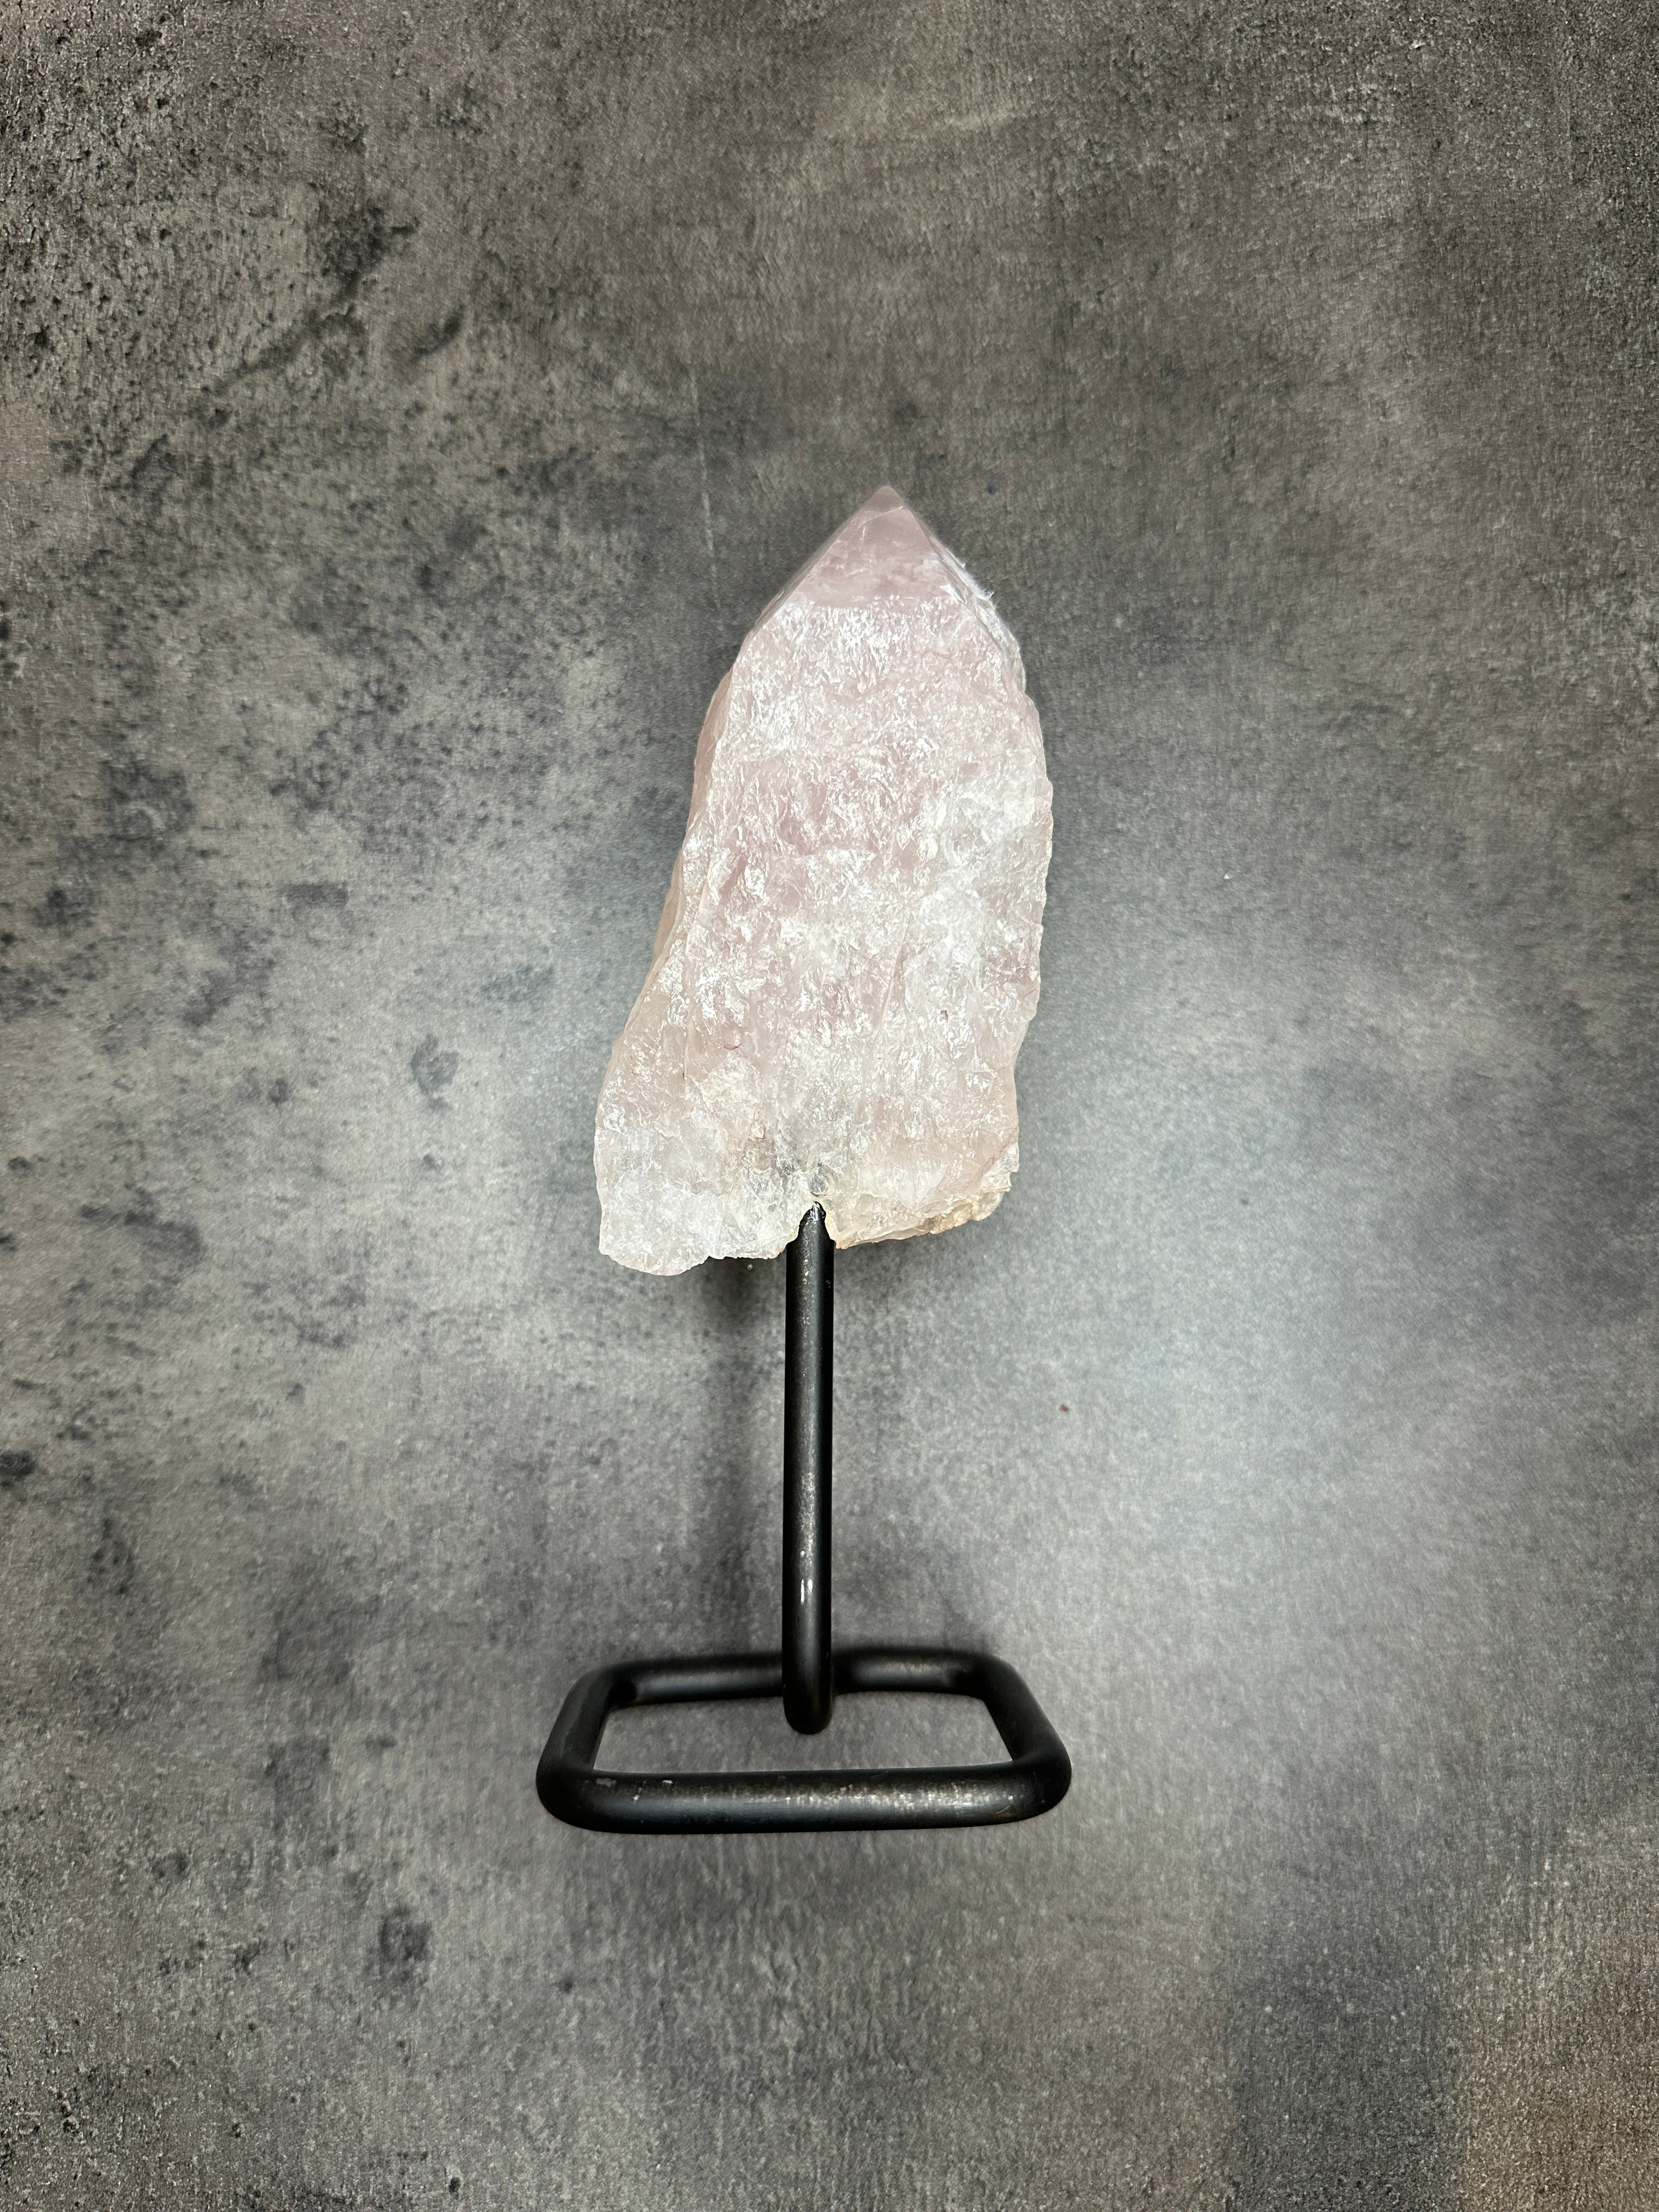 Rose quartz - Rough chunk on stand